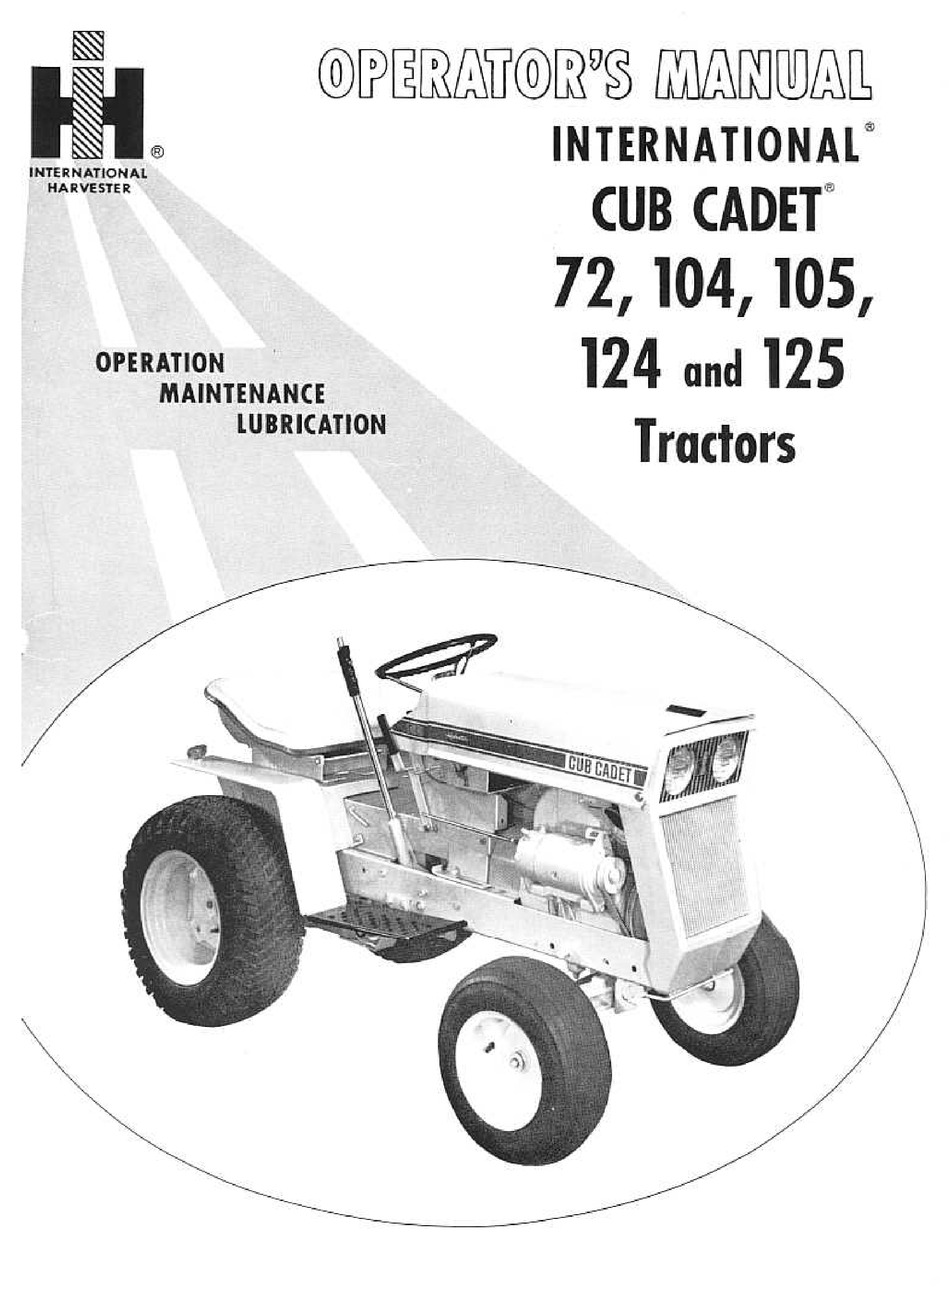 Прицеп для Cub Cadet. Cub Cadet 125 Parts. International Harvester Cub. Lawn tractor.